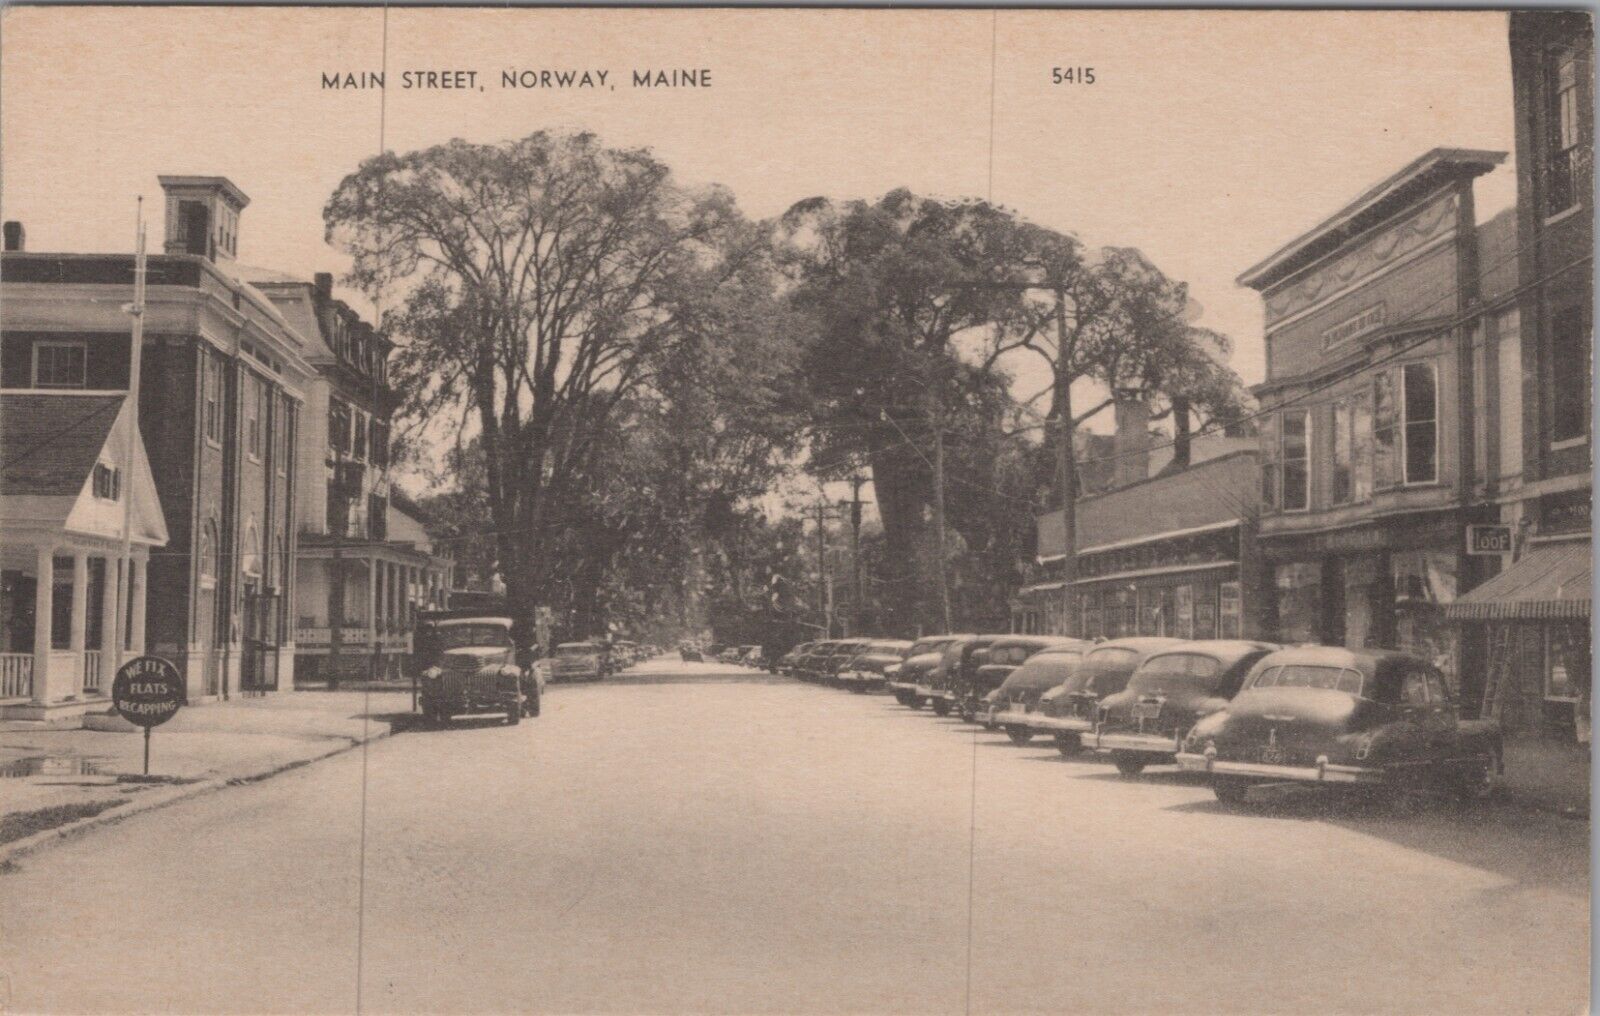 MR ALE ~ Main Street Norway, Maine ME Old Cars 1940s UNP PC 7412.1